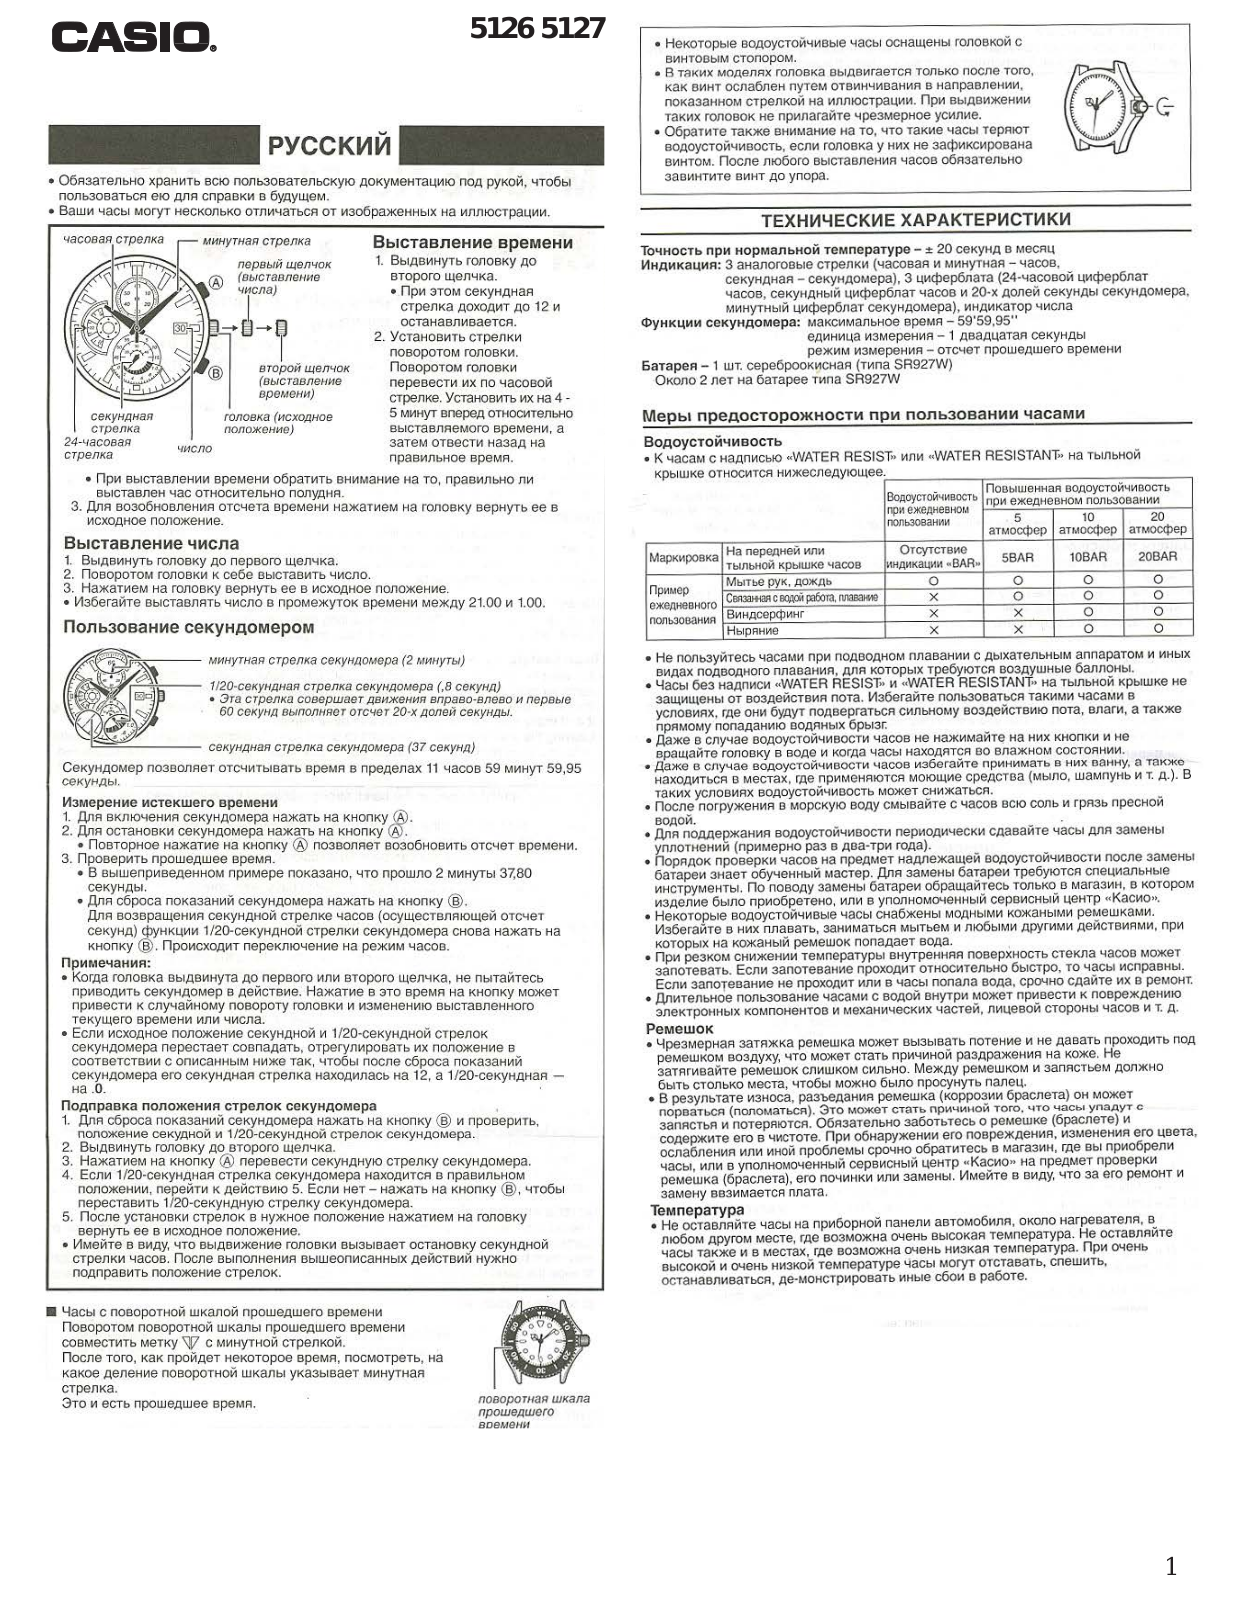 Casio EFR-513D-7A User Manual